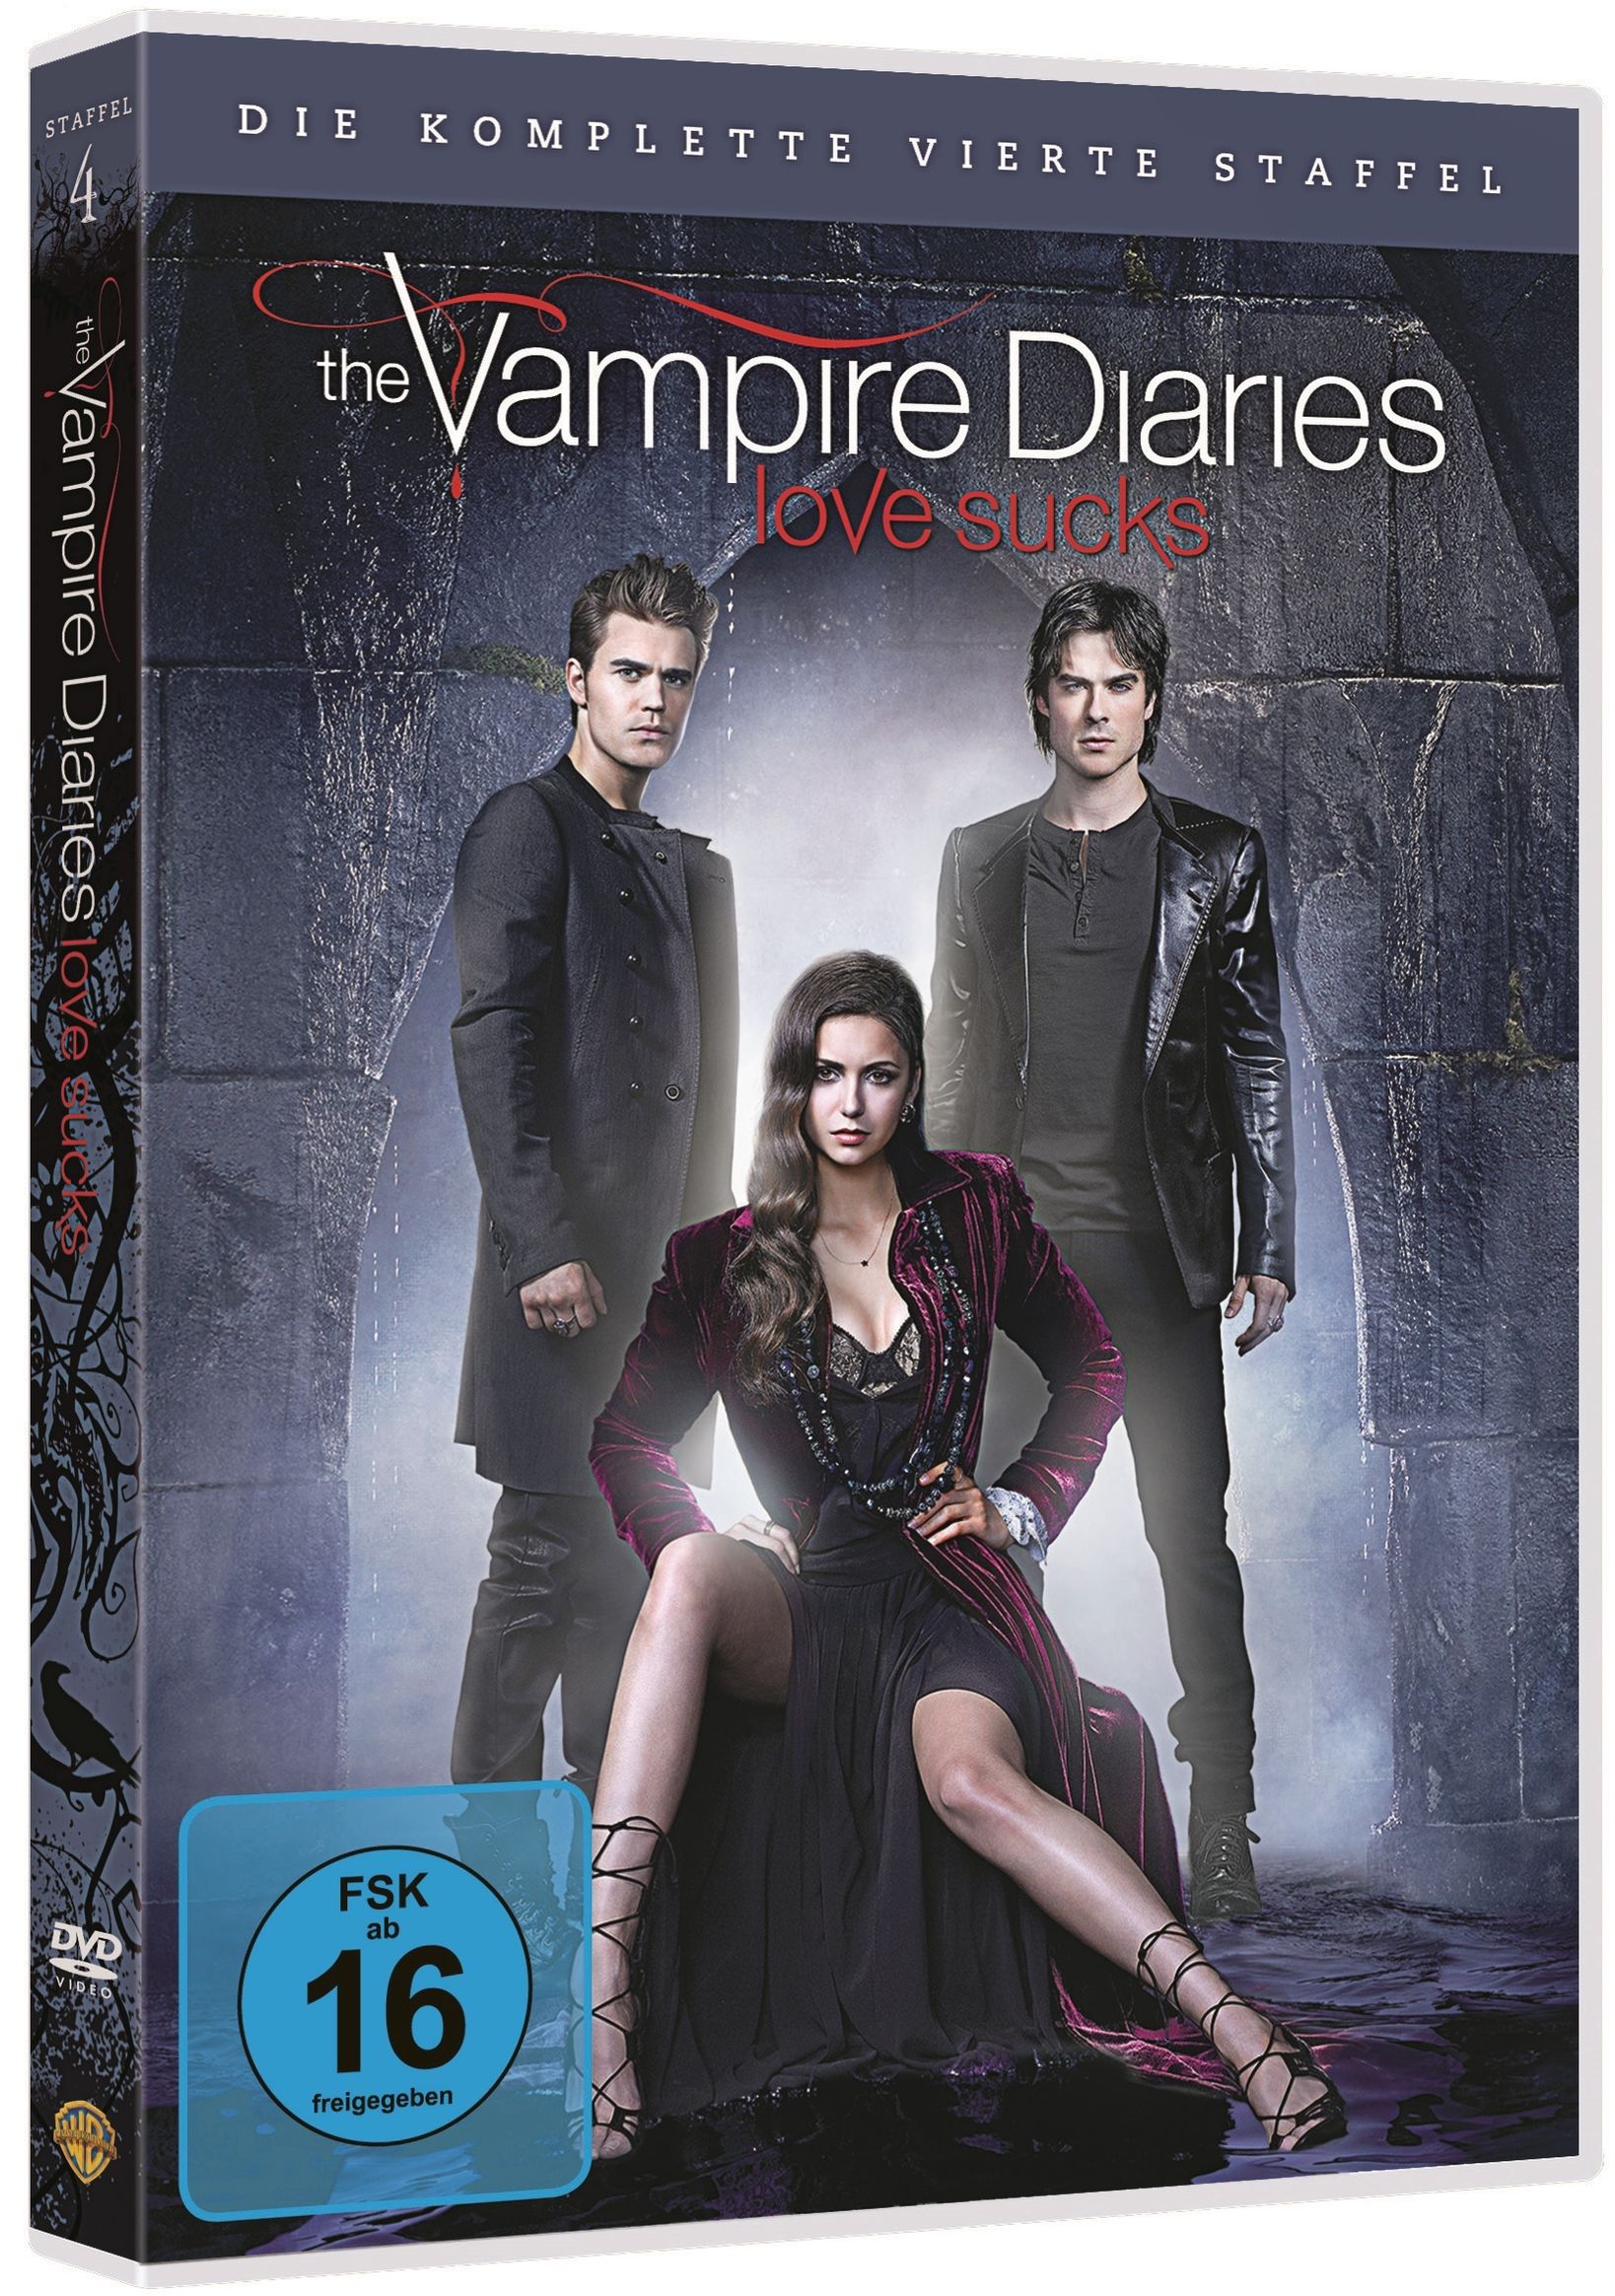 The Vampire Diaries - Staffel 4 DVD bei Weltbild.de bestellen